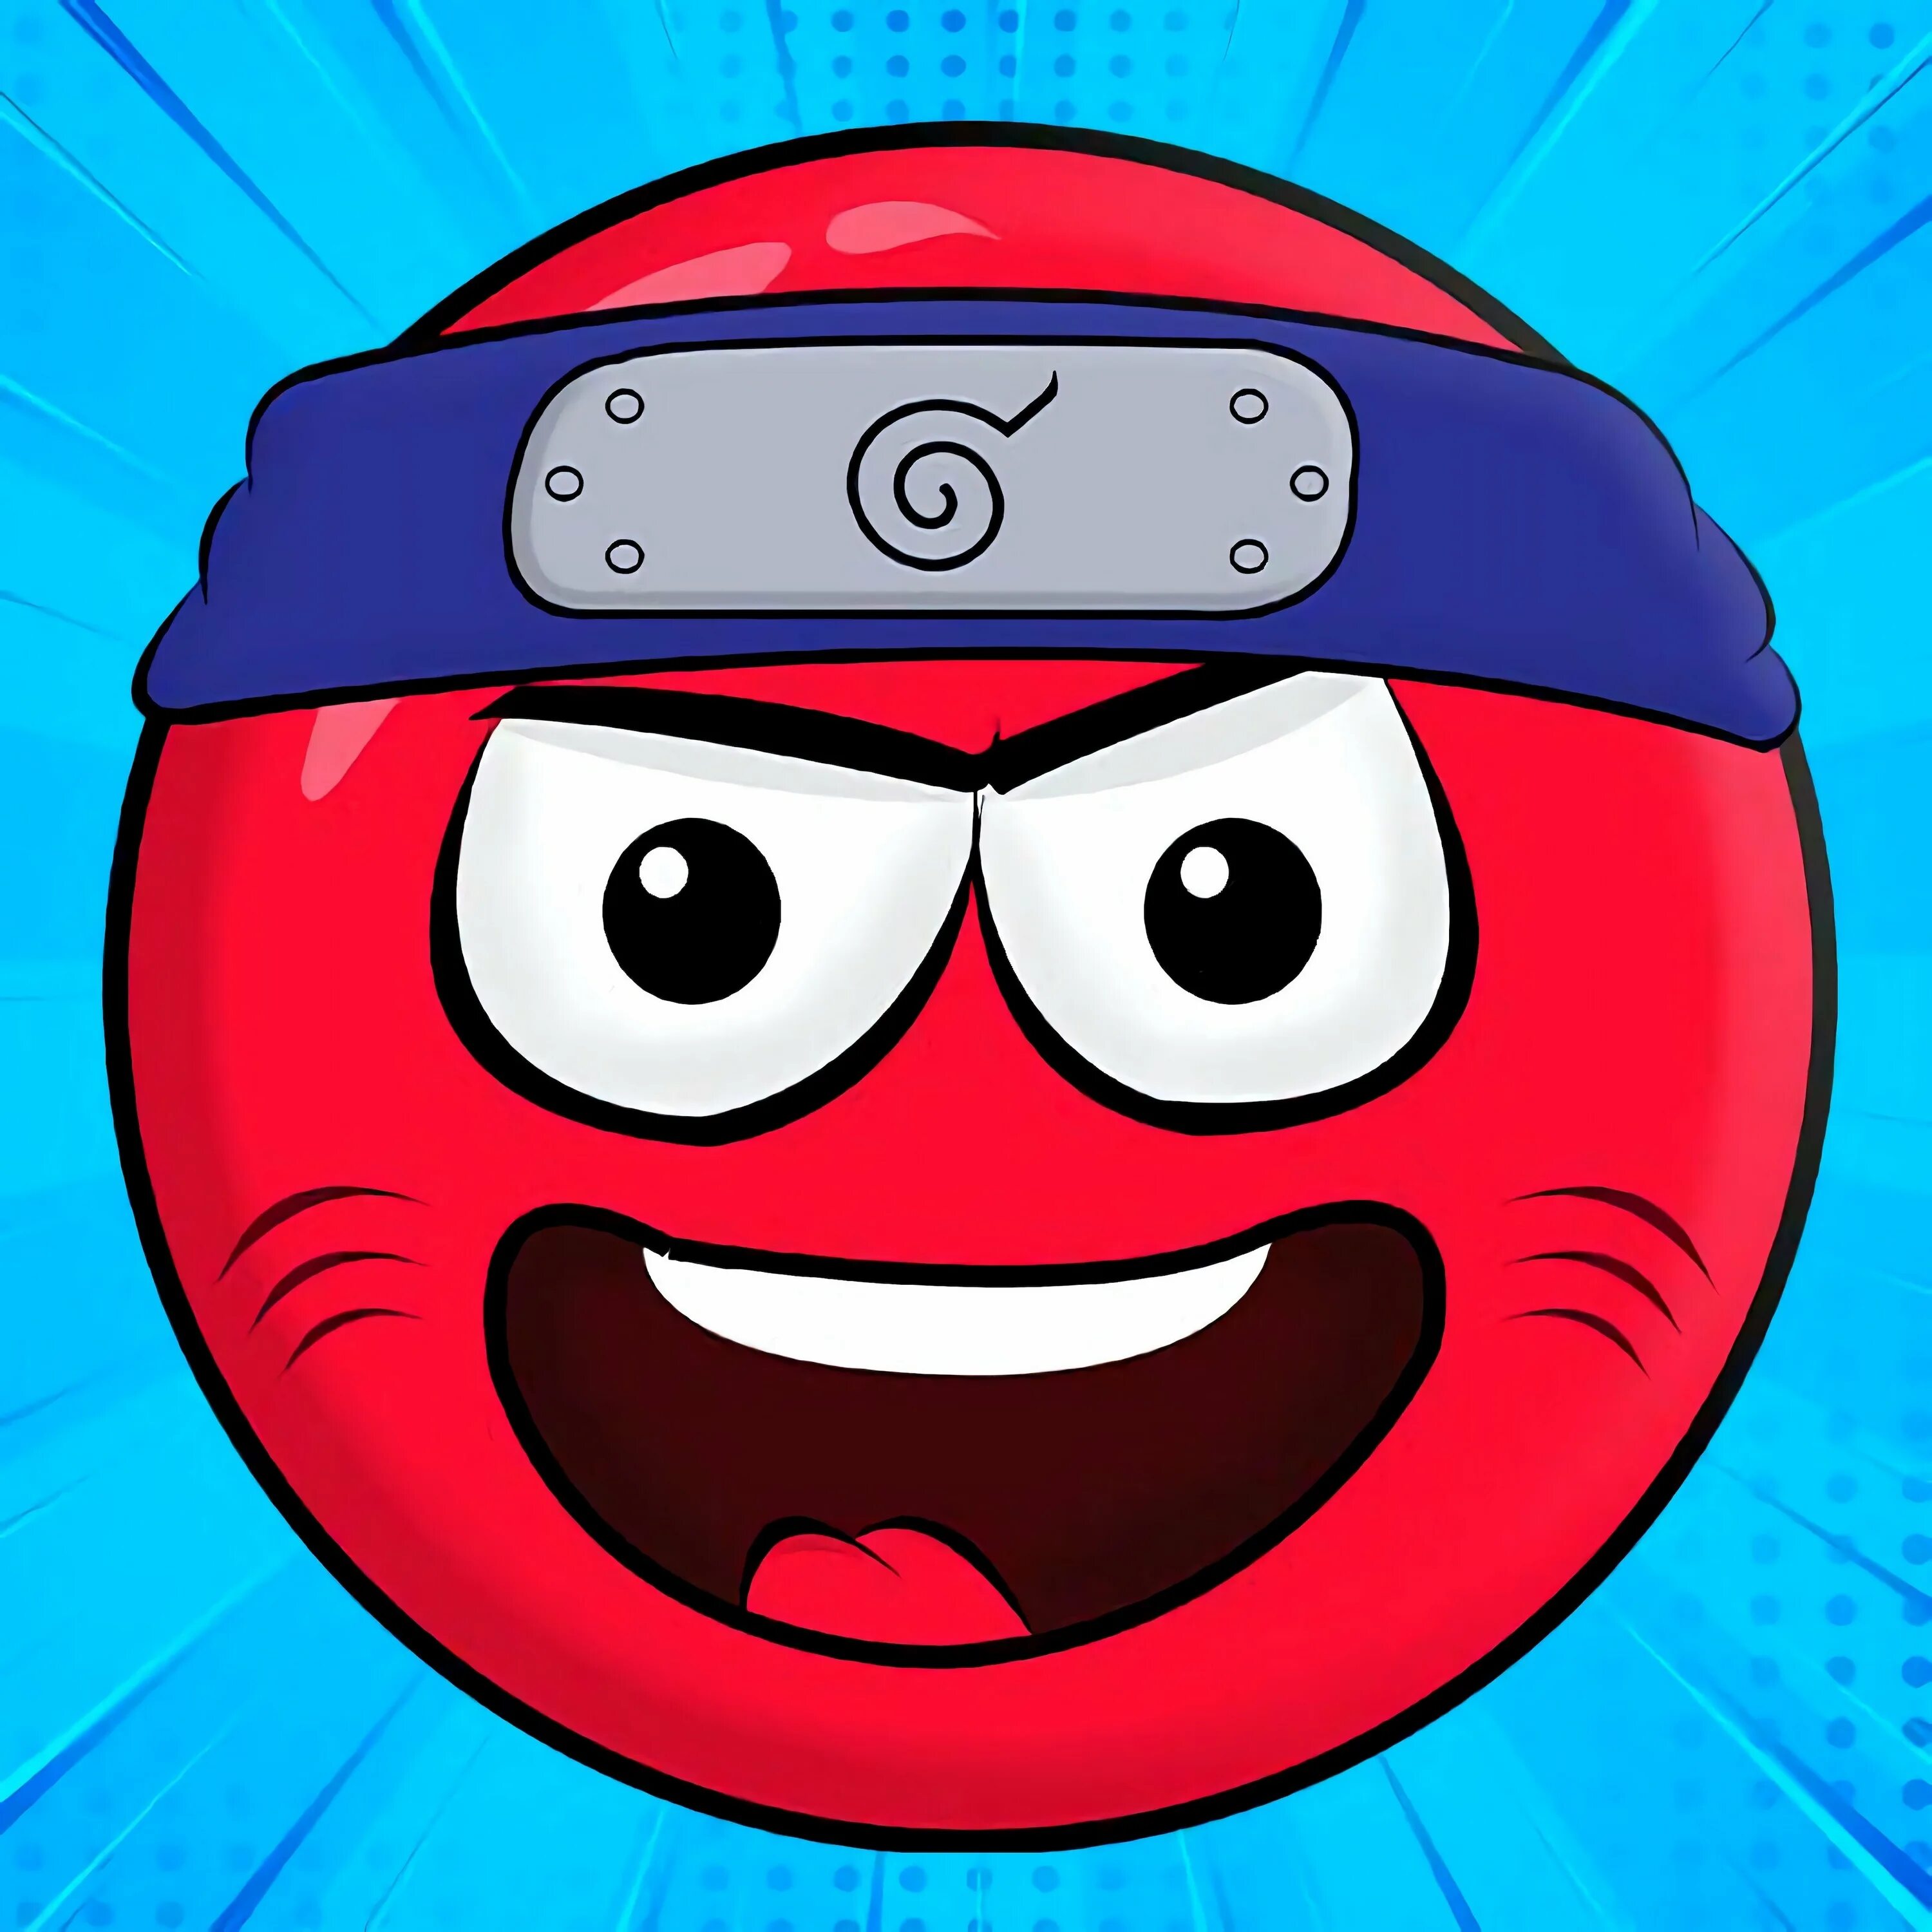 Игра с красными шарами. Игра Red Ball 4. Красный шар ред бол 4. Red Ball Adventure игра. Ball Hero Adventure: Red Bounce Ball.